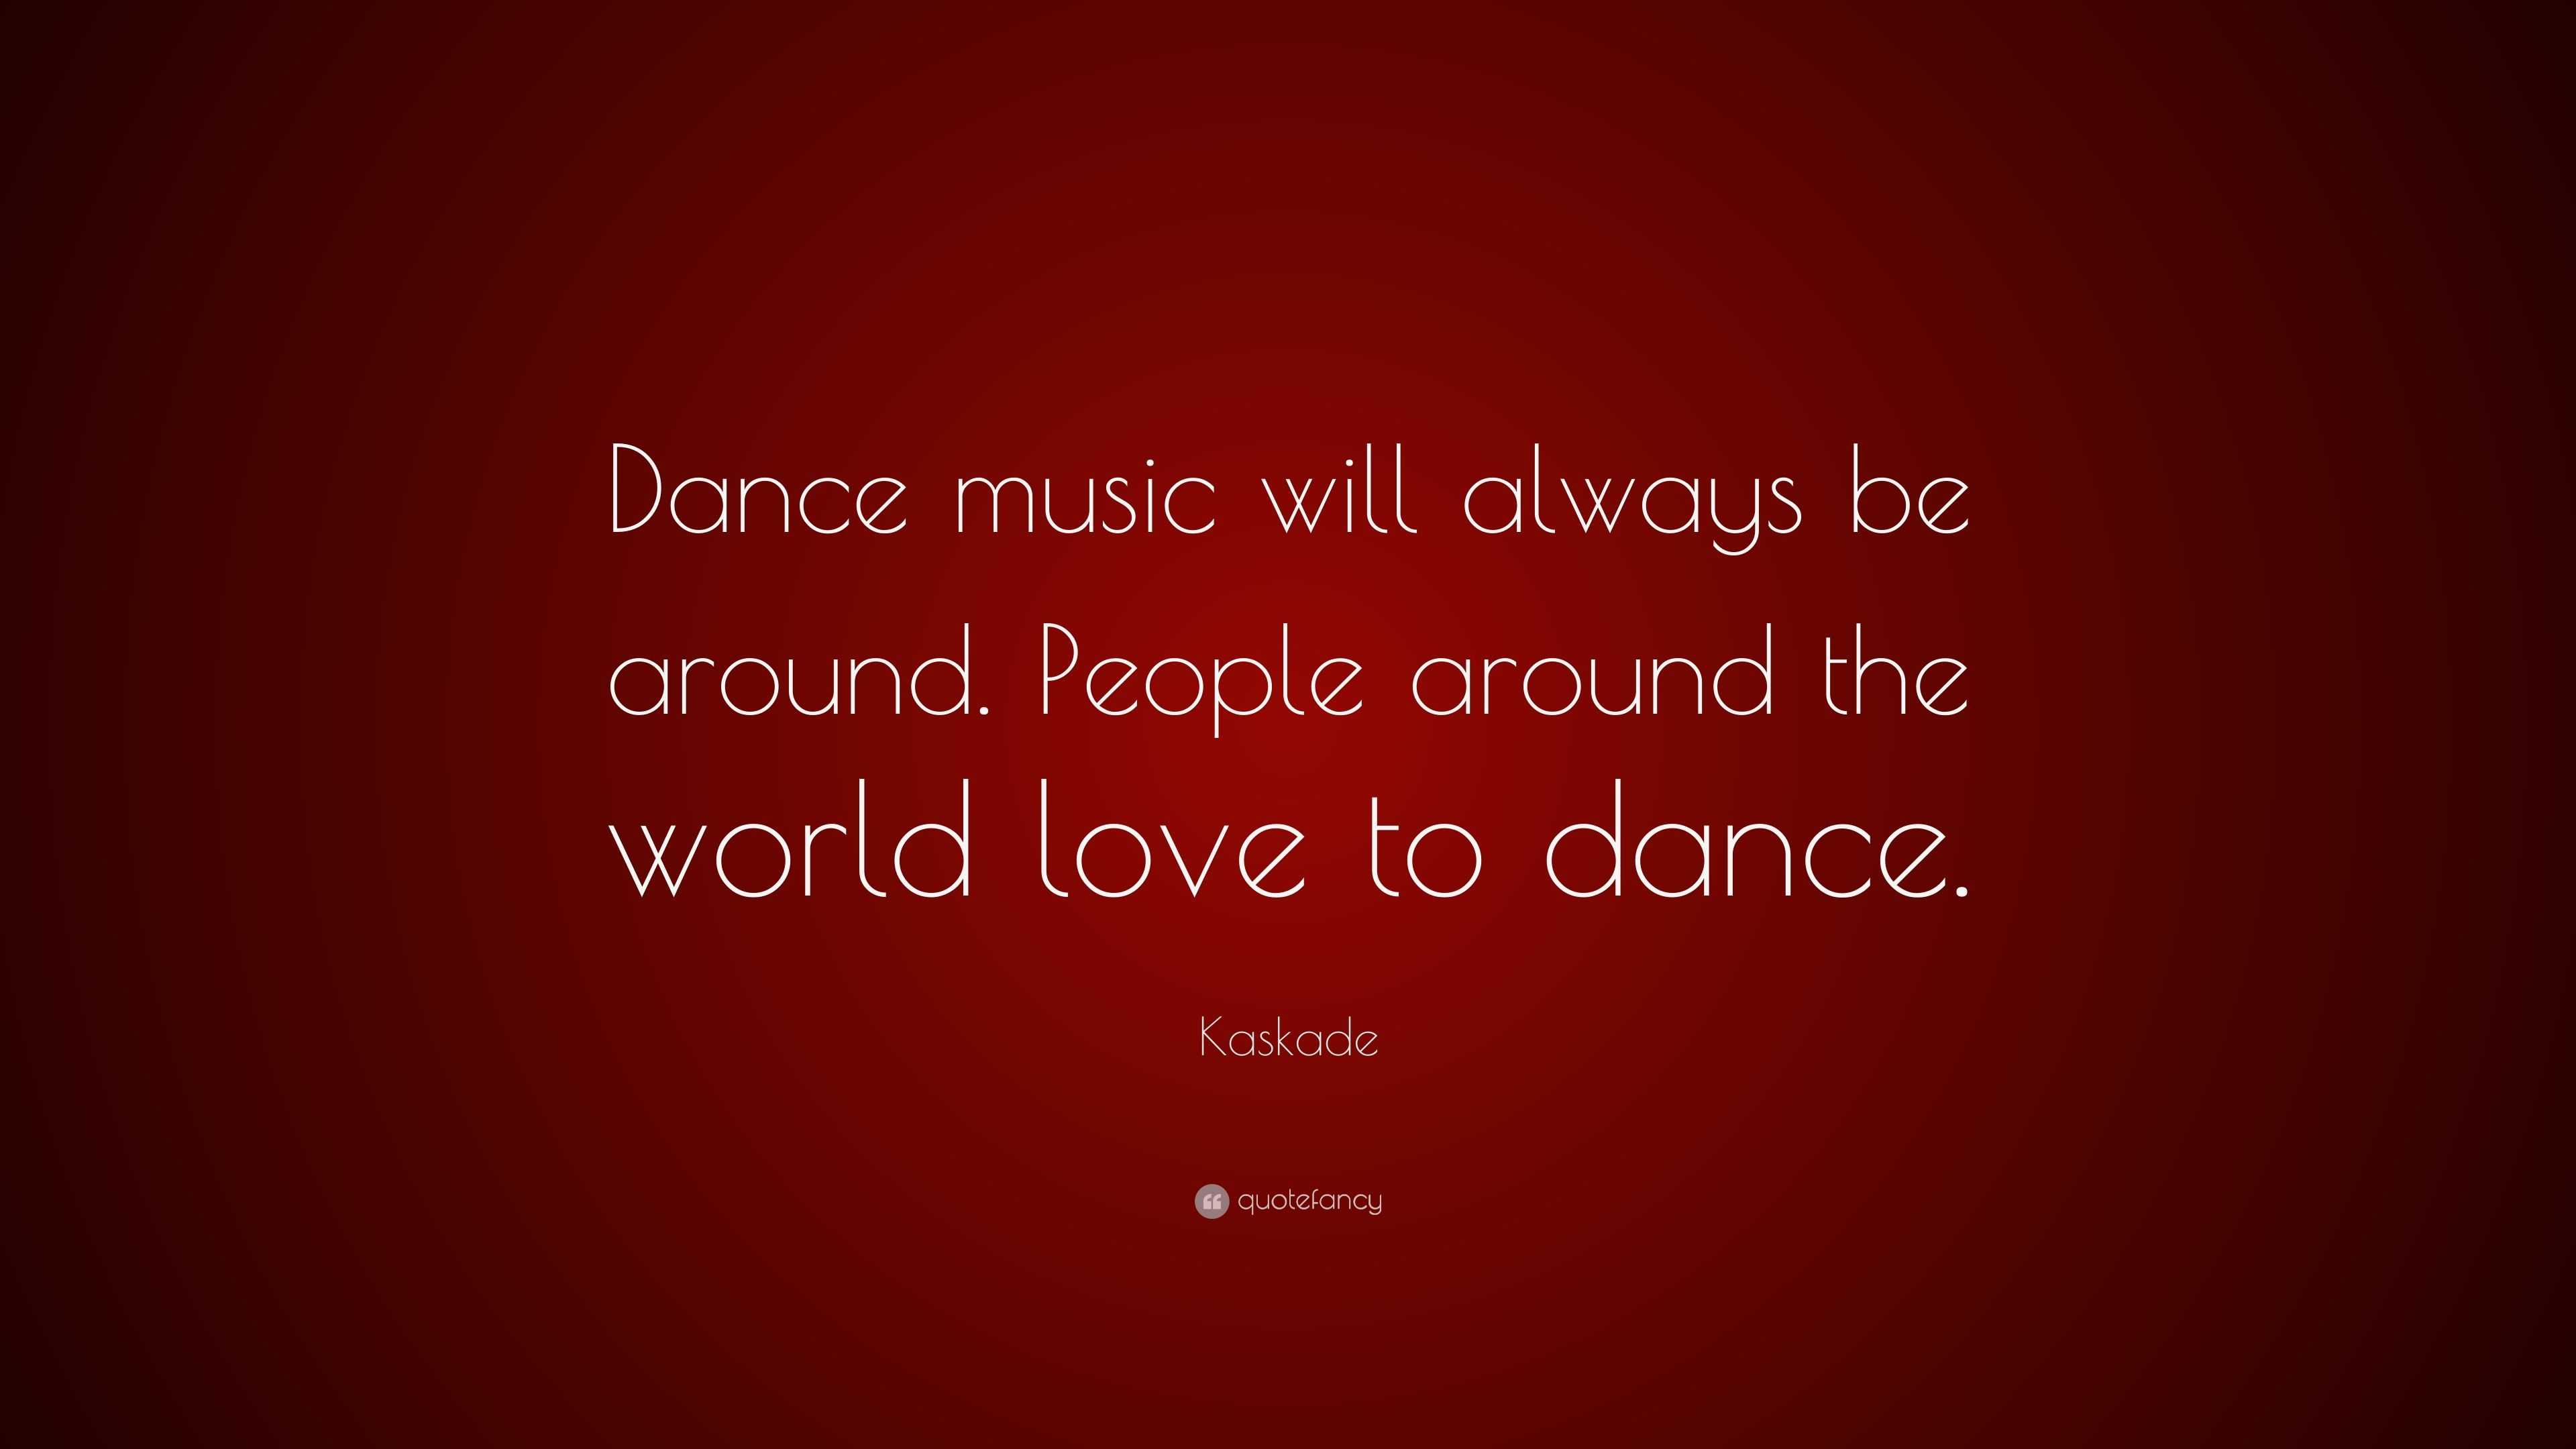 Love That Dance Music